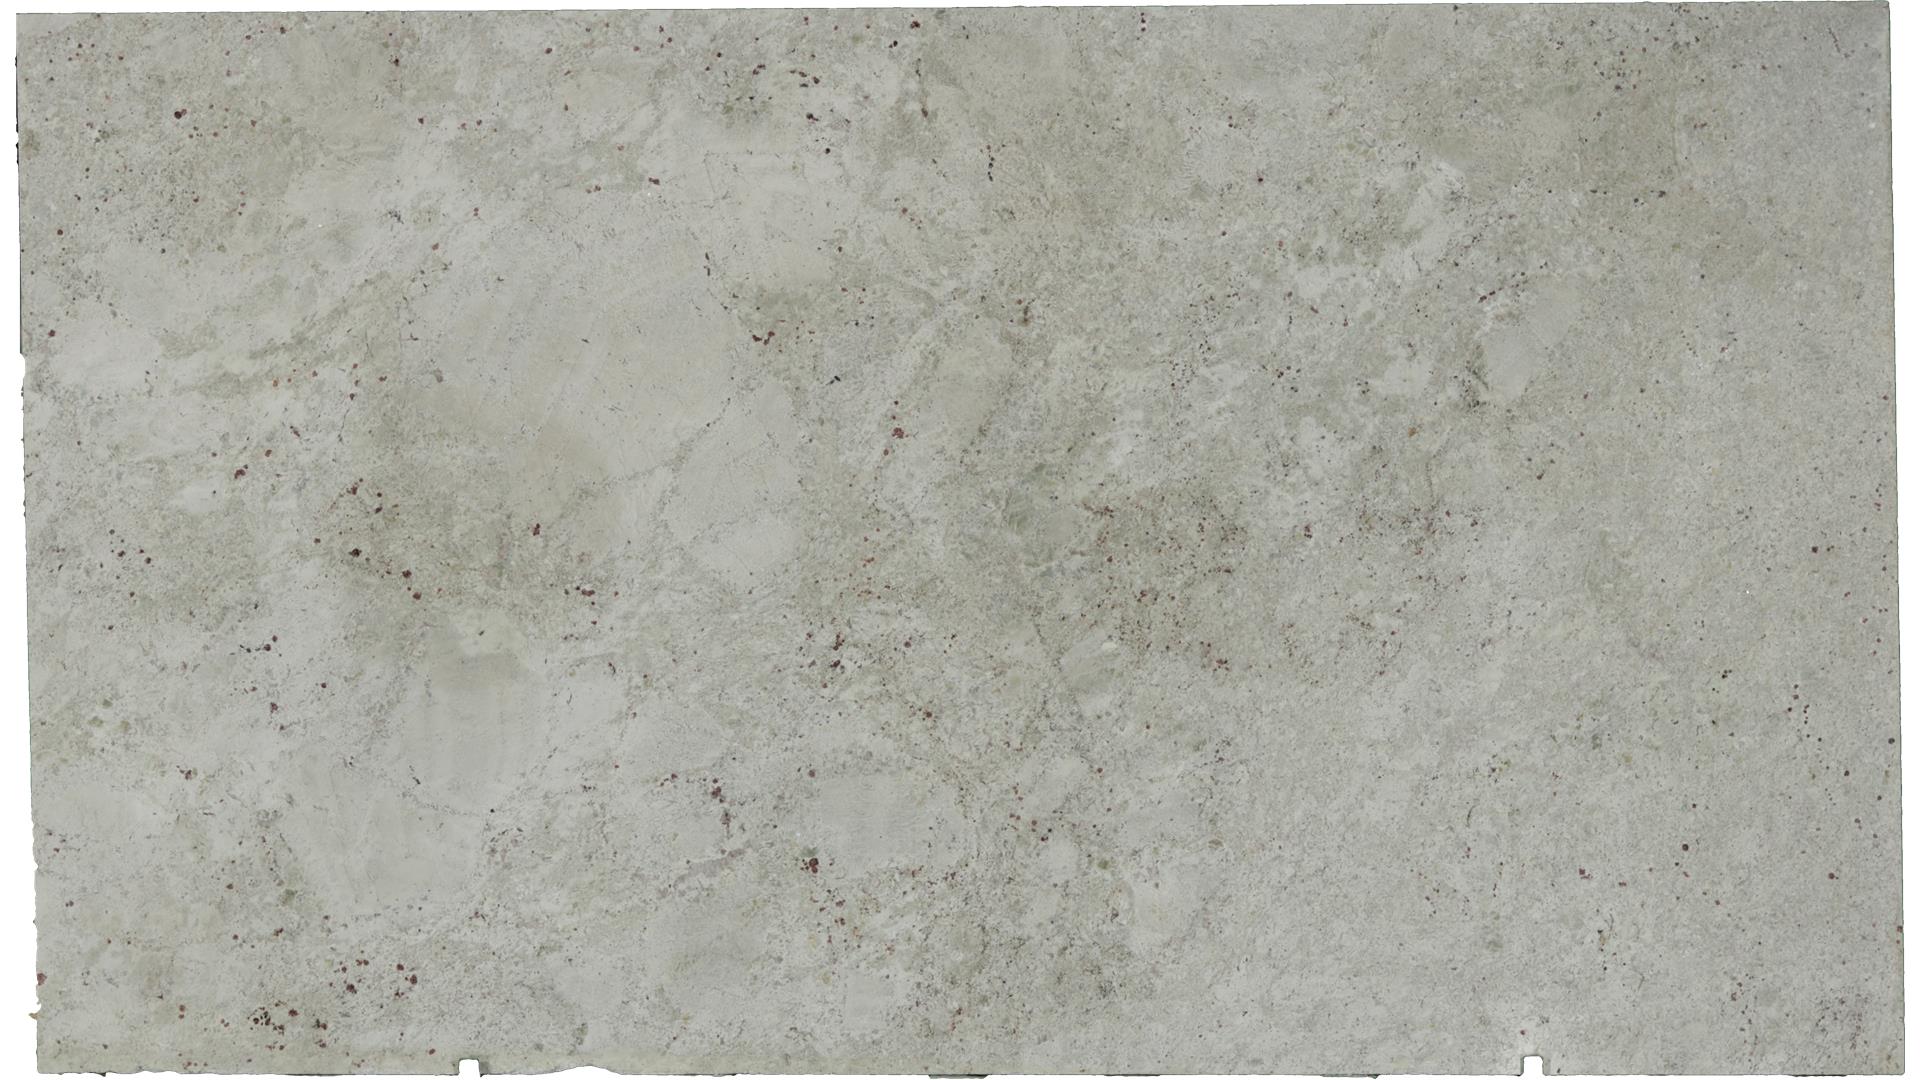 Colonial White Granite Slabs